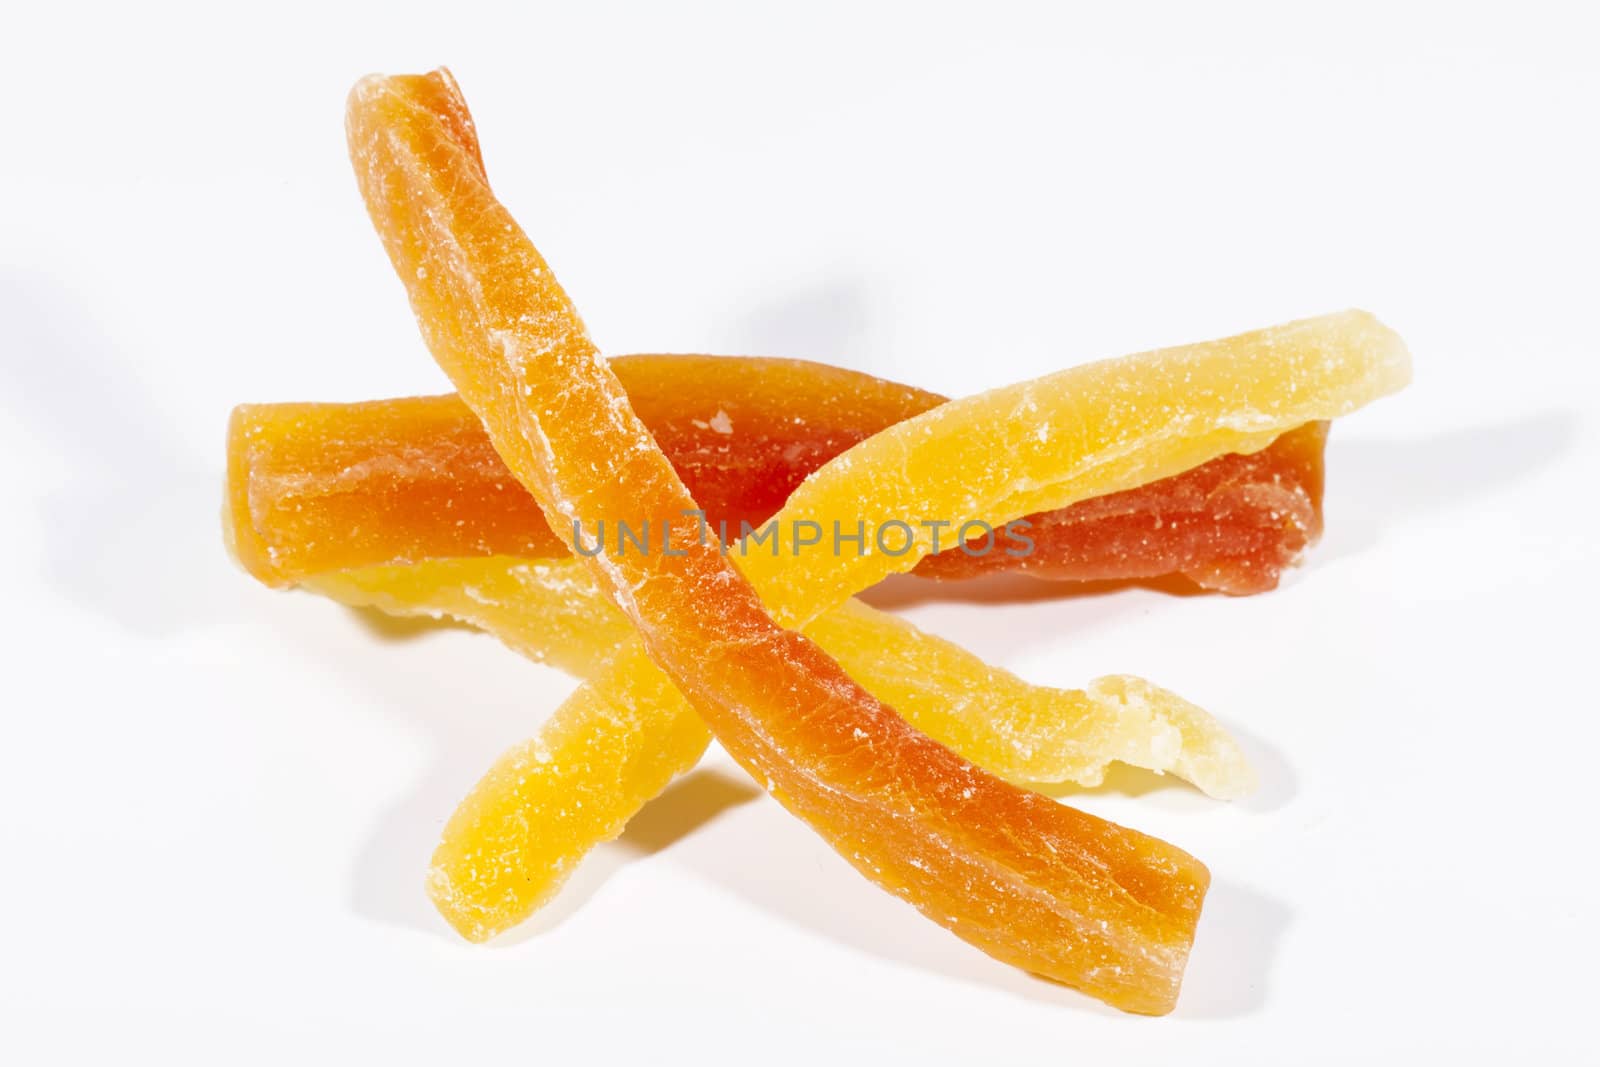 Sweet papaya fruits in sugar isolated on white by RawGroup